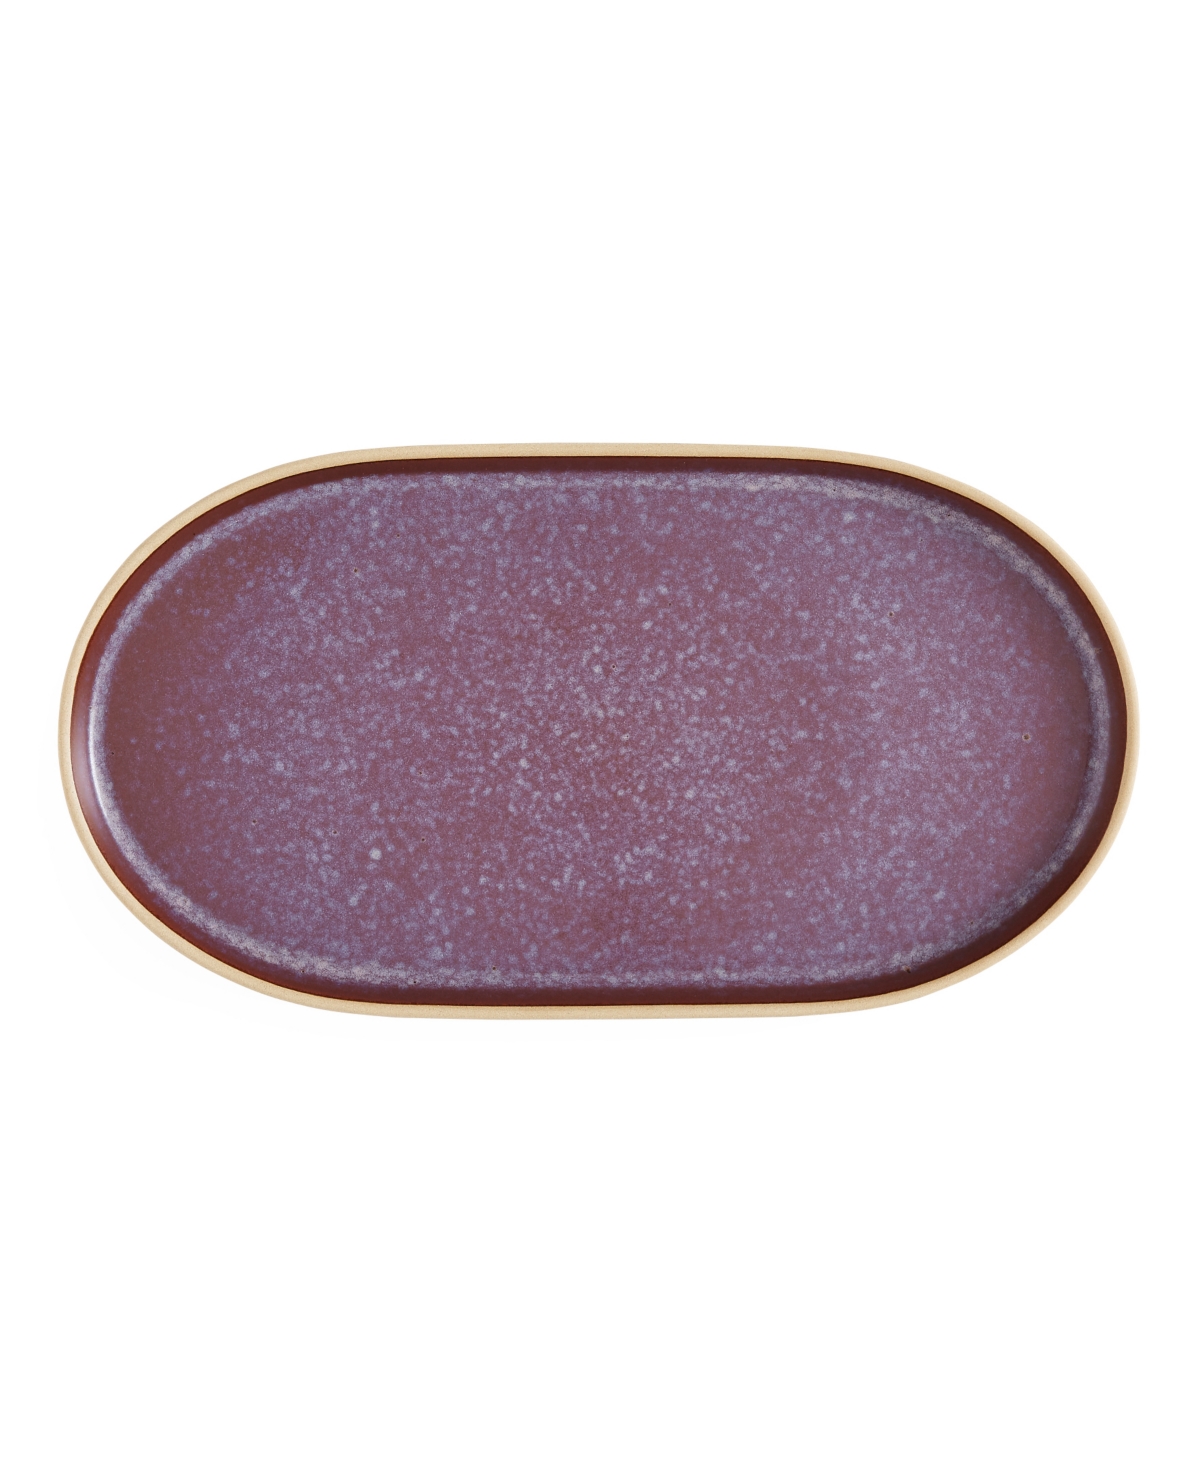 Minerals Large Oval Platter - Amethyst